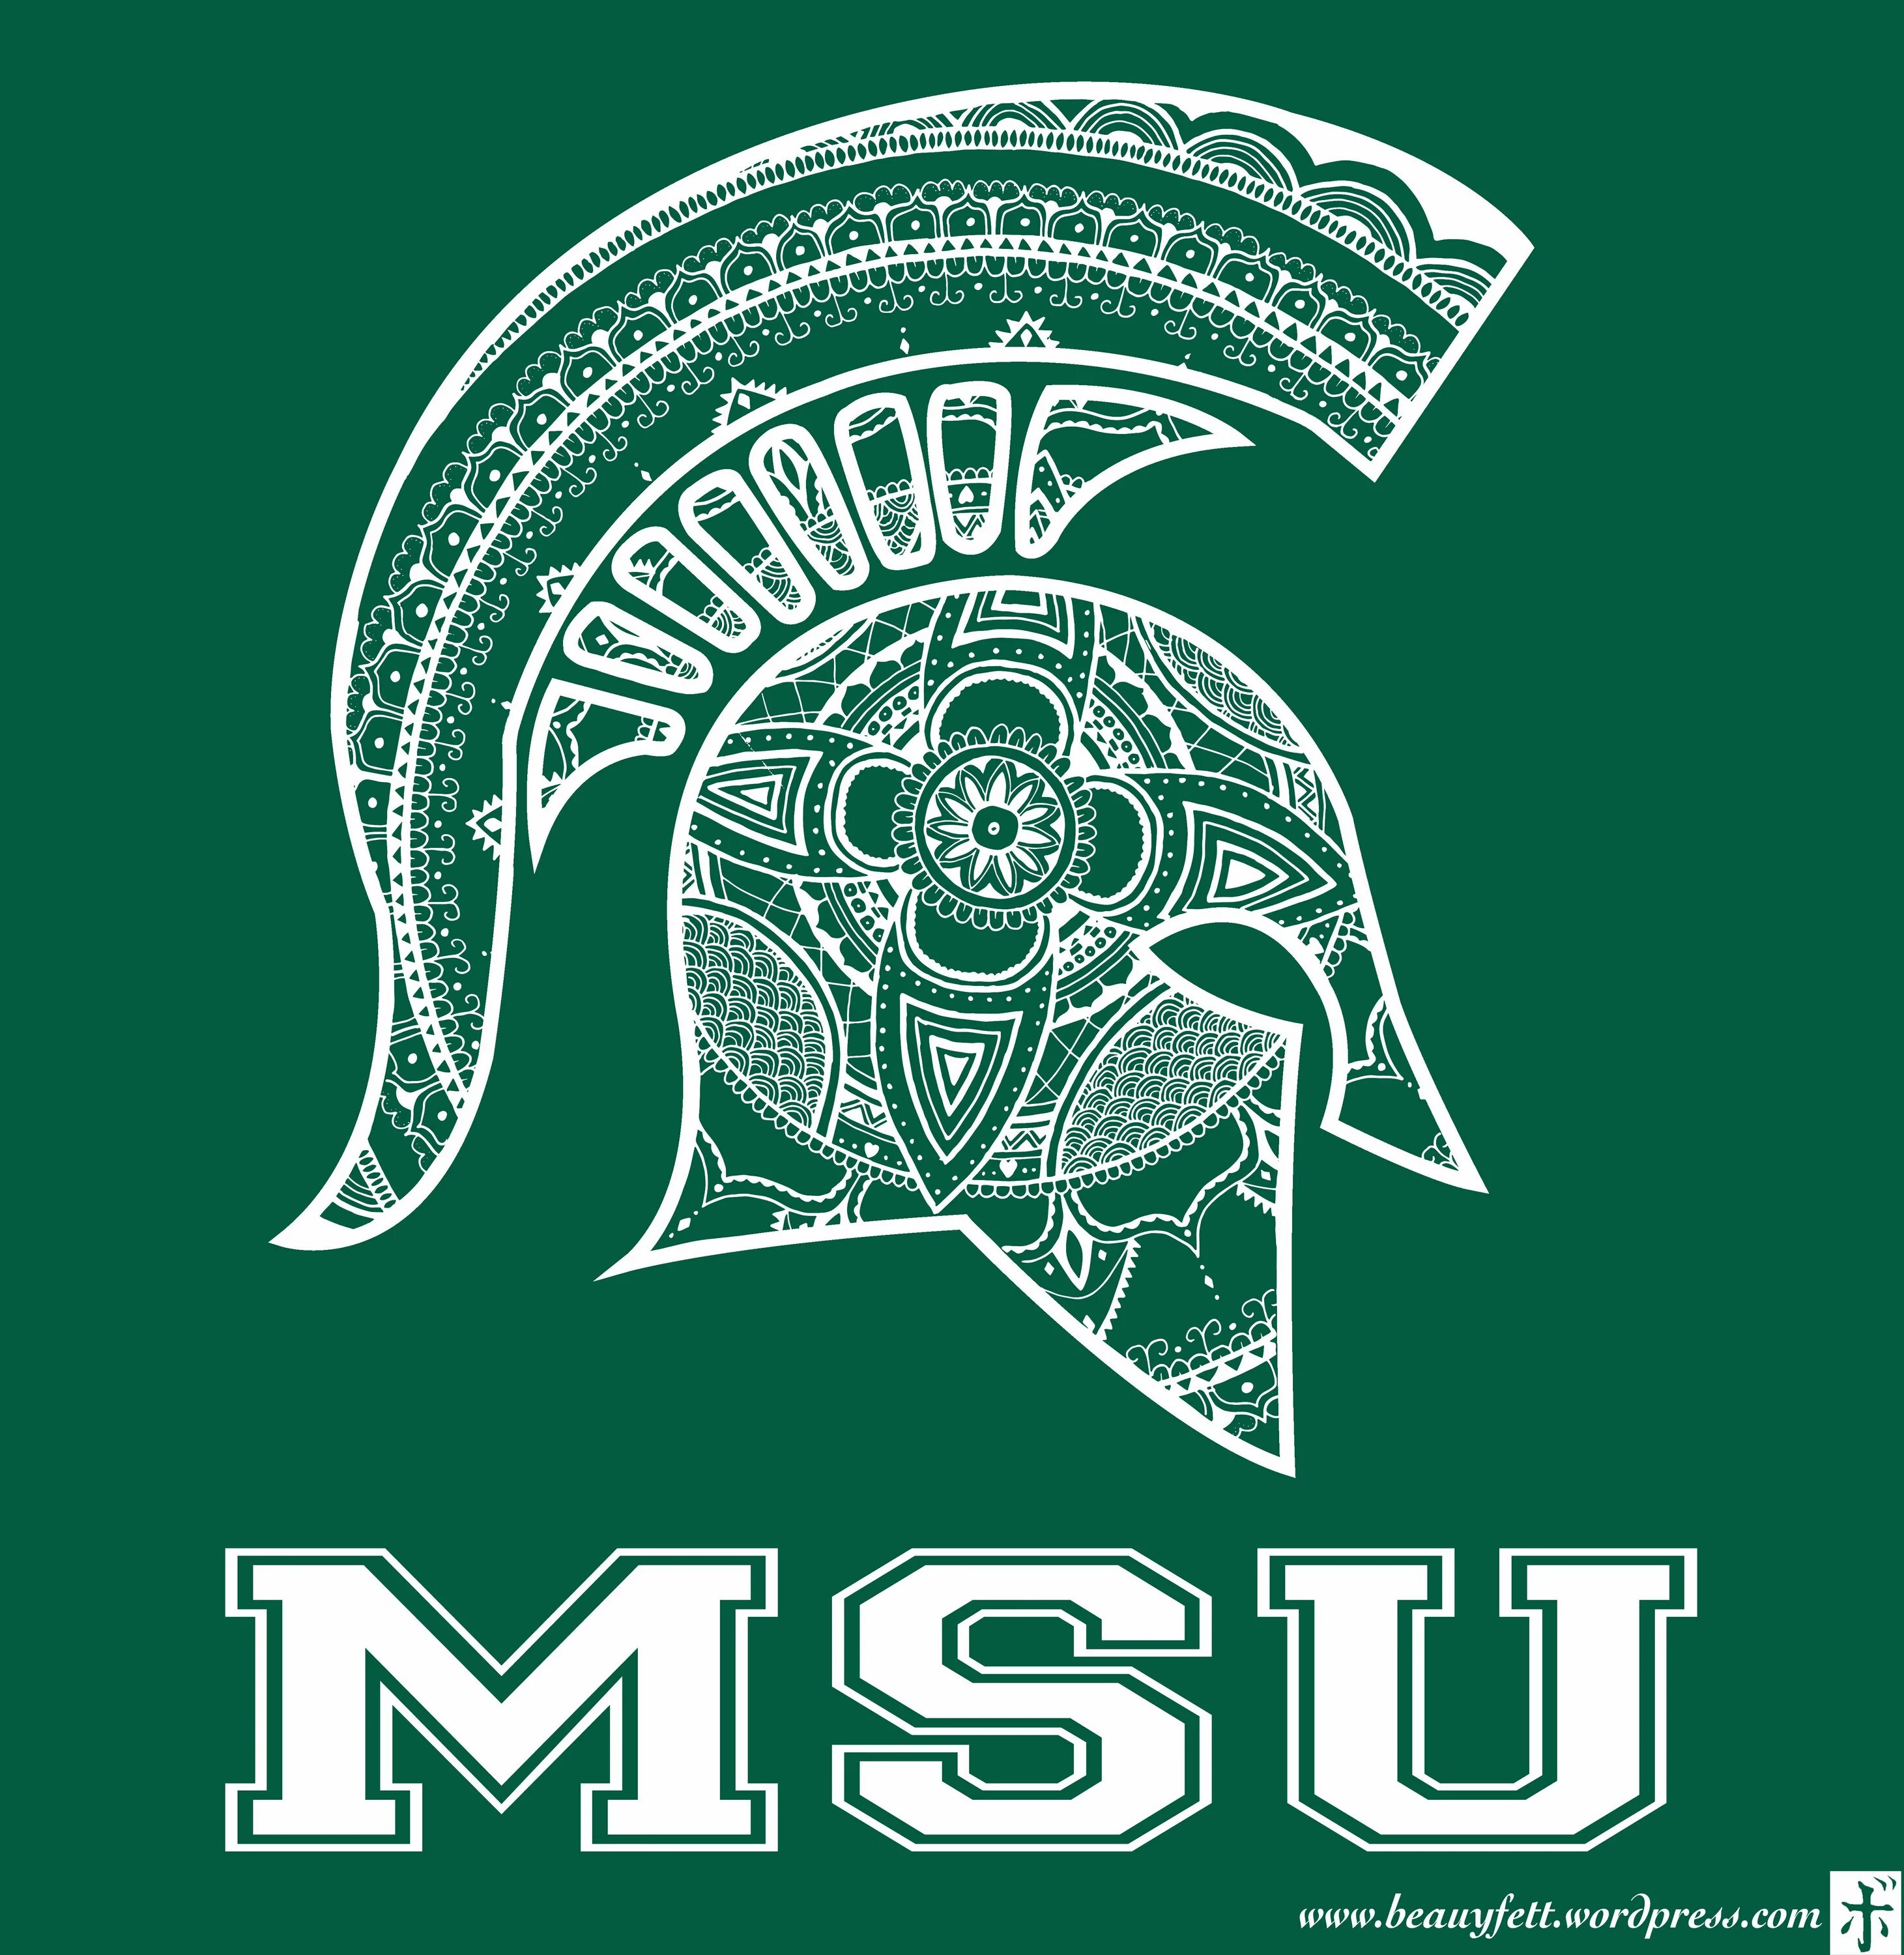 Michigan State Spartans. Michigan State University. Michigan State logo. Лого Спартанс Мичиган. Michigan state